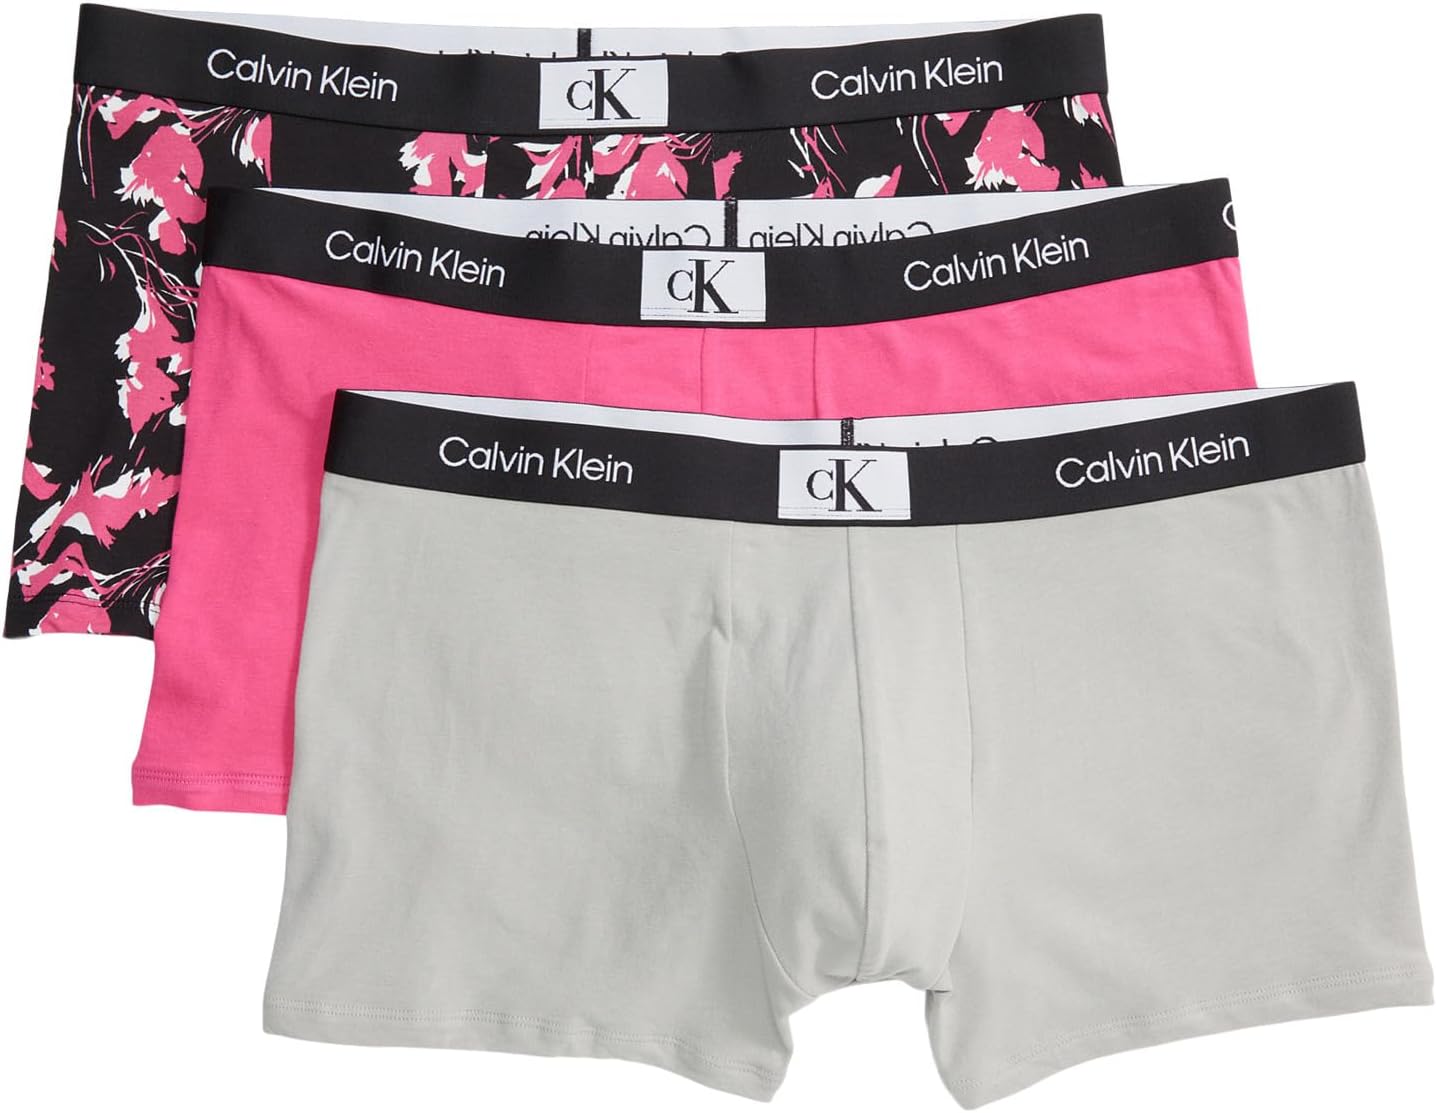 Трусы 1996 Cotton Trunks 3-Pack Calvin Klein Underwear, цвет Ripple Floral/Fuchsia Rose/Fuchsia Rose/Authentic Grey